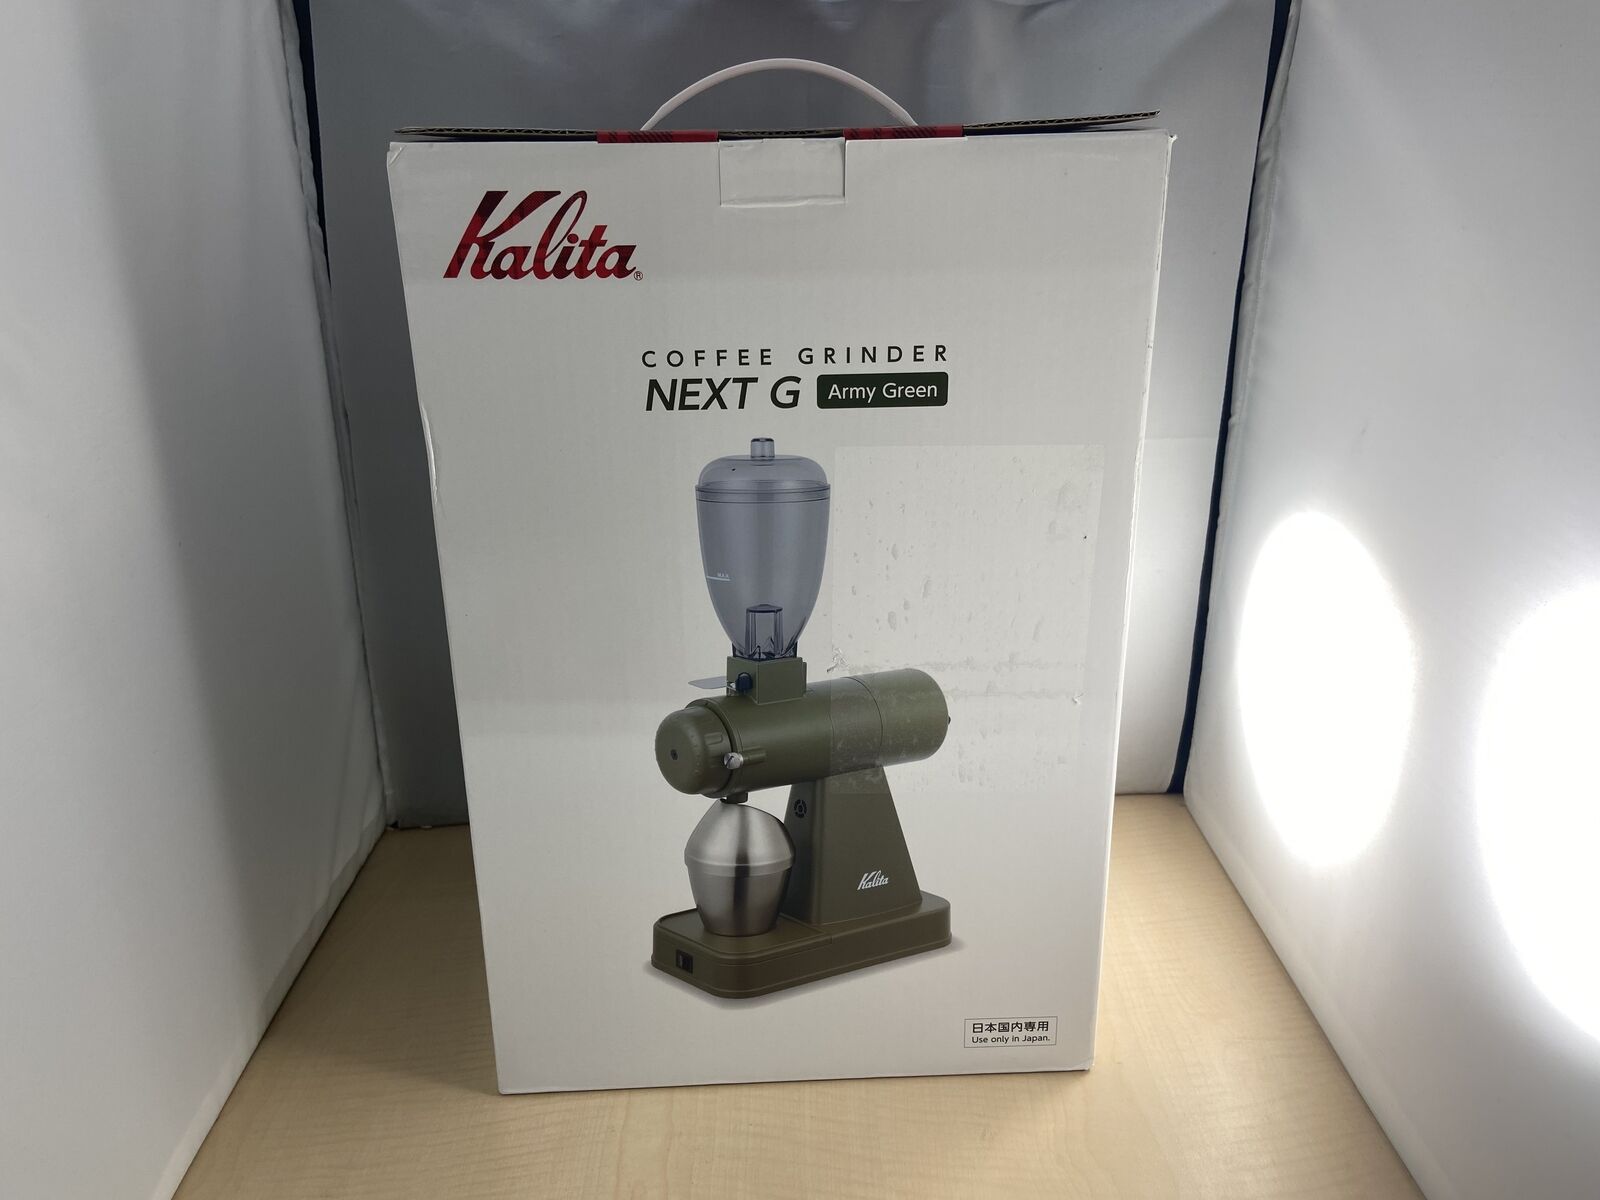 Kalita Coffee Mill 61090 Next G Army Green for sale online | eBay